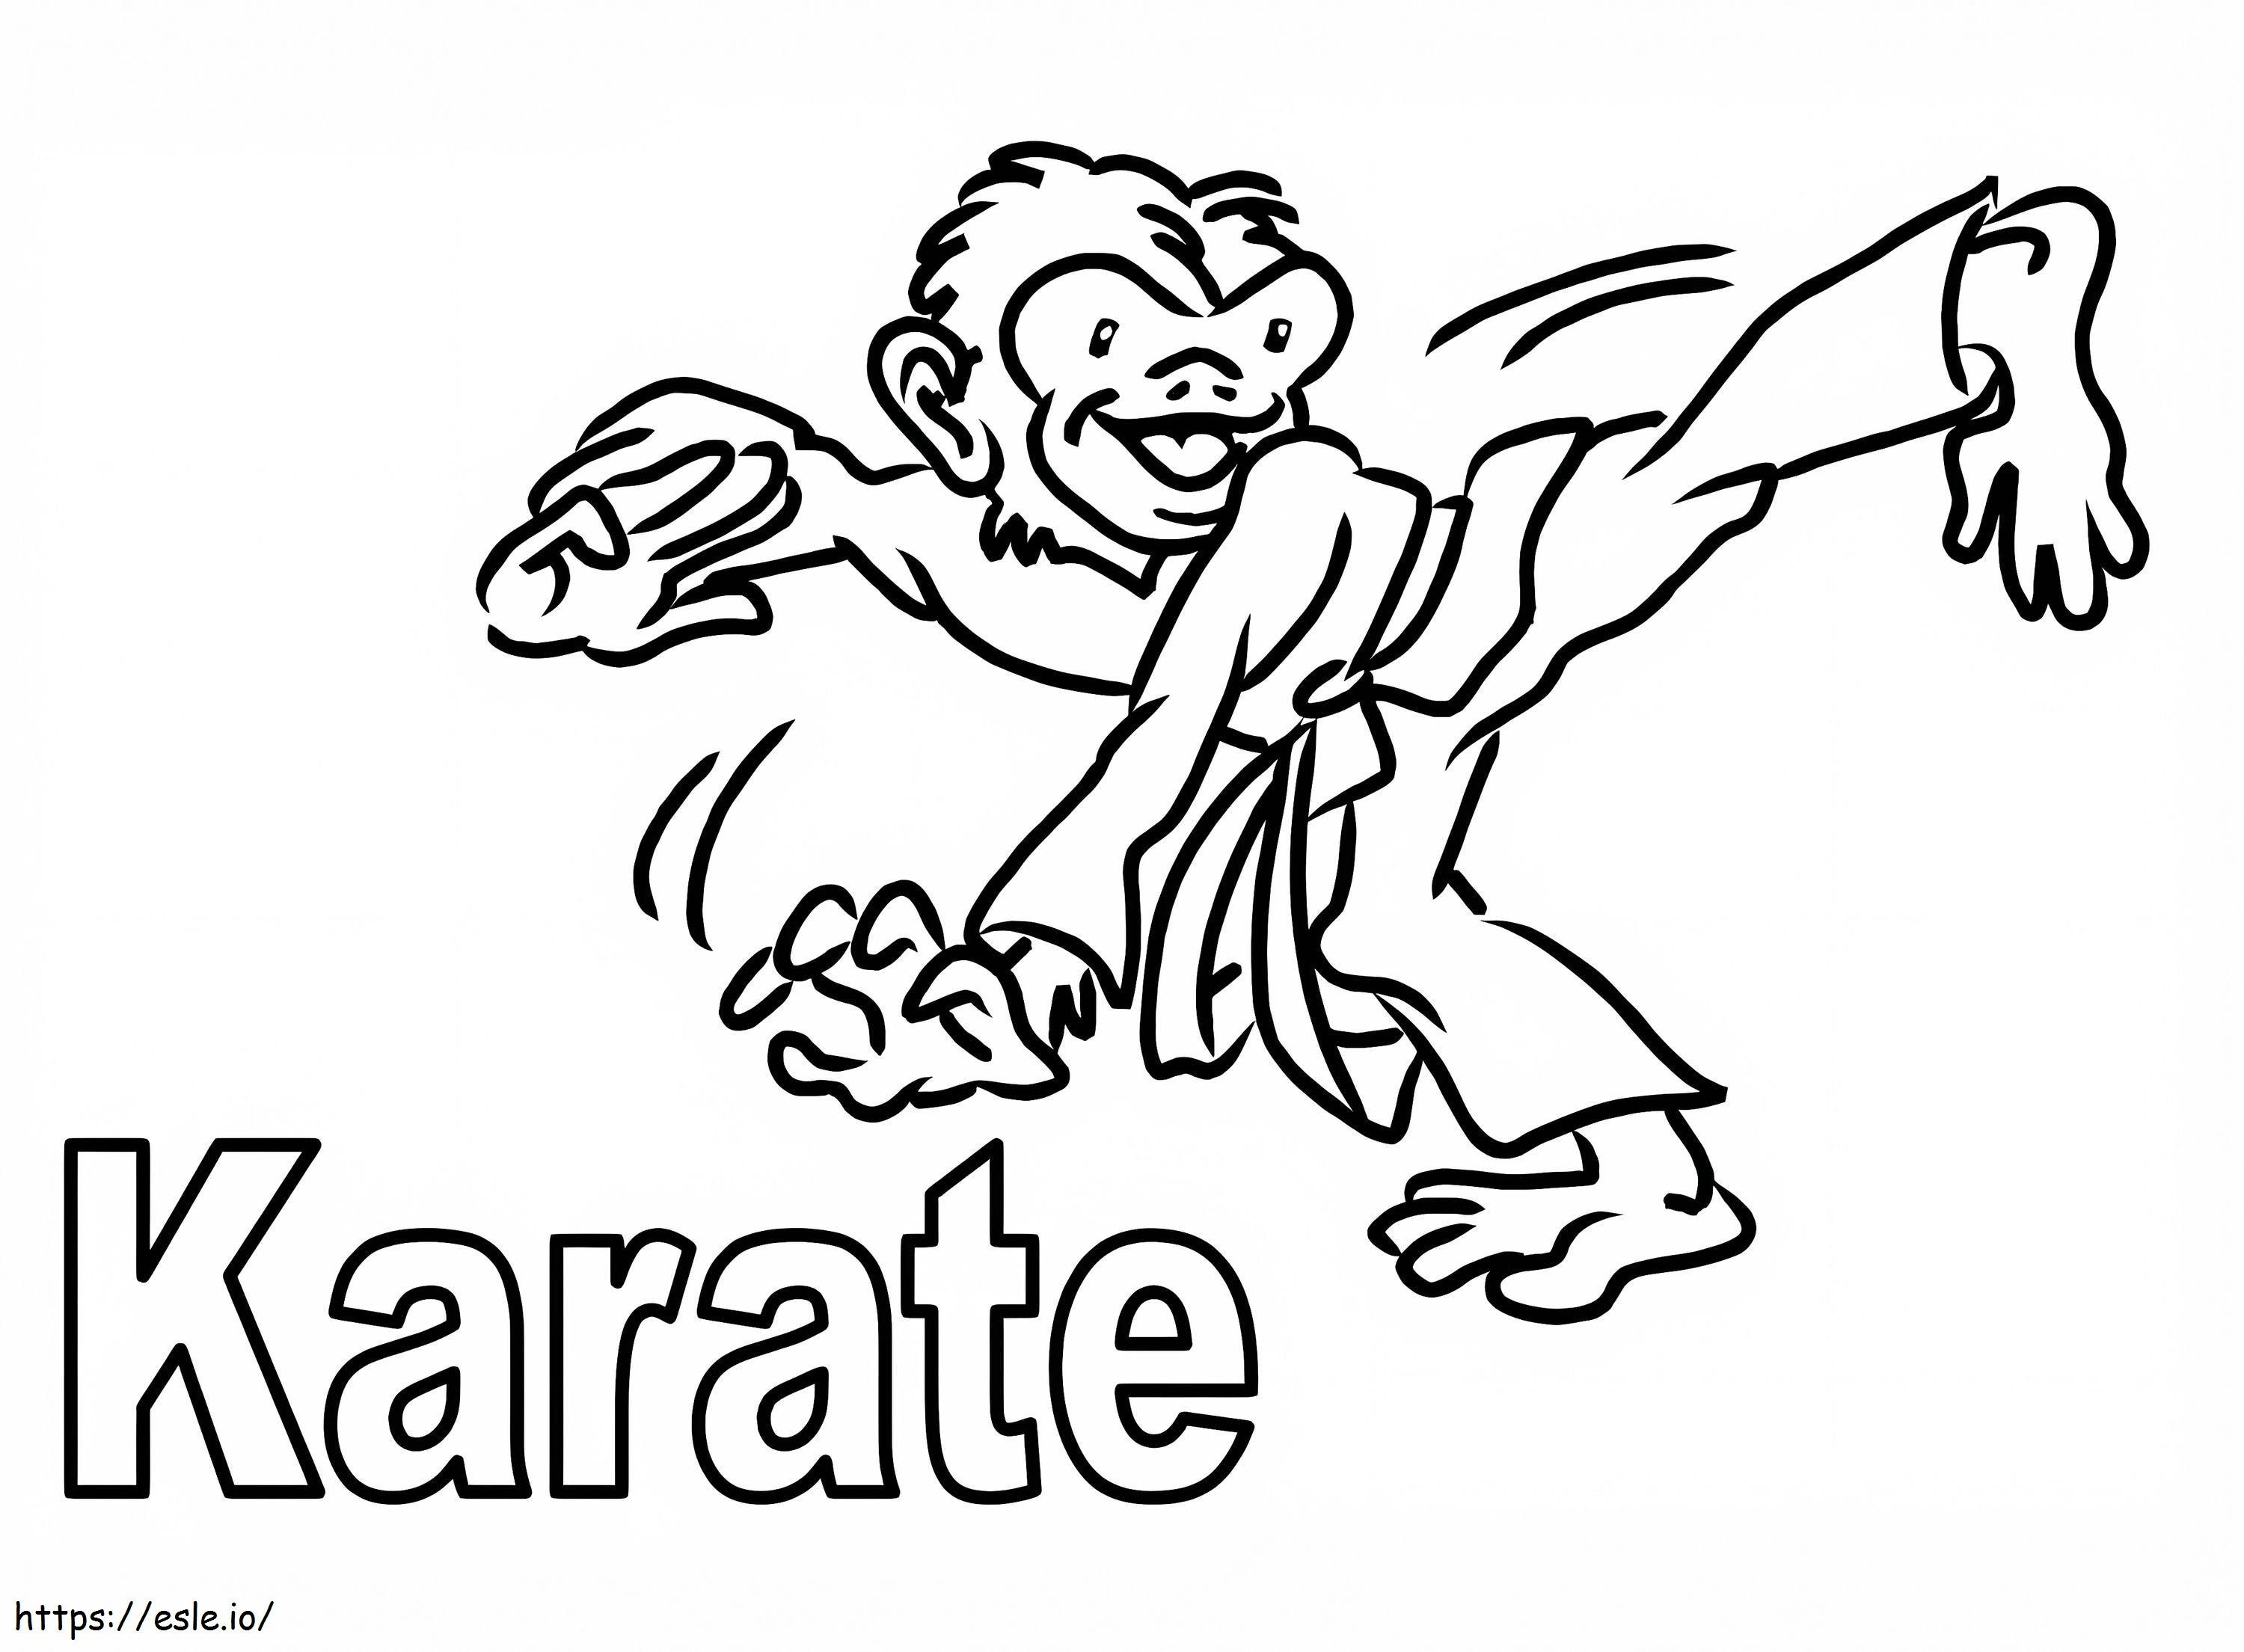 Karate Małpa kolorowanka